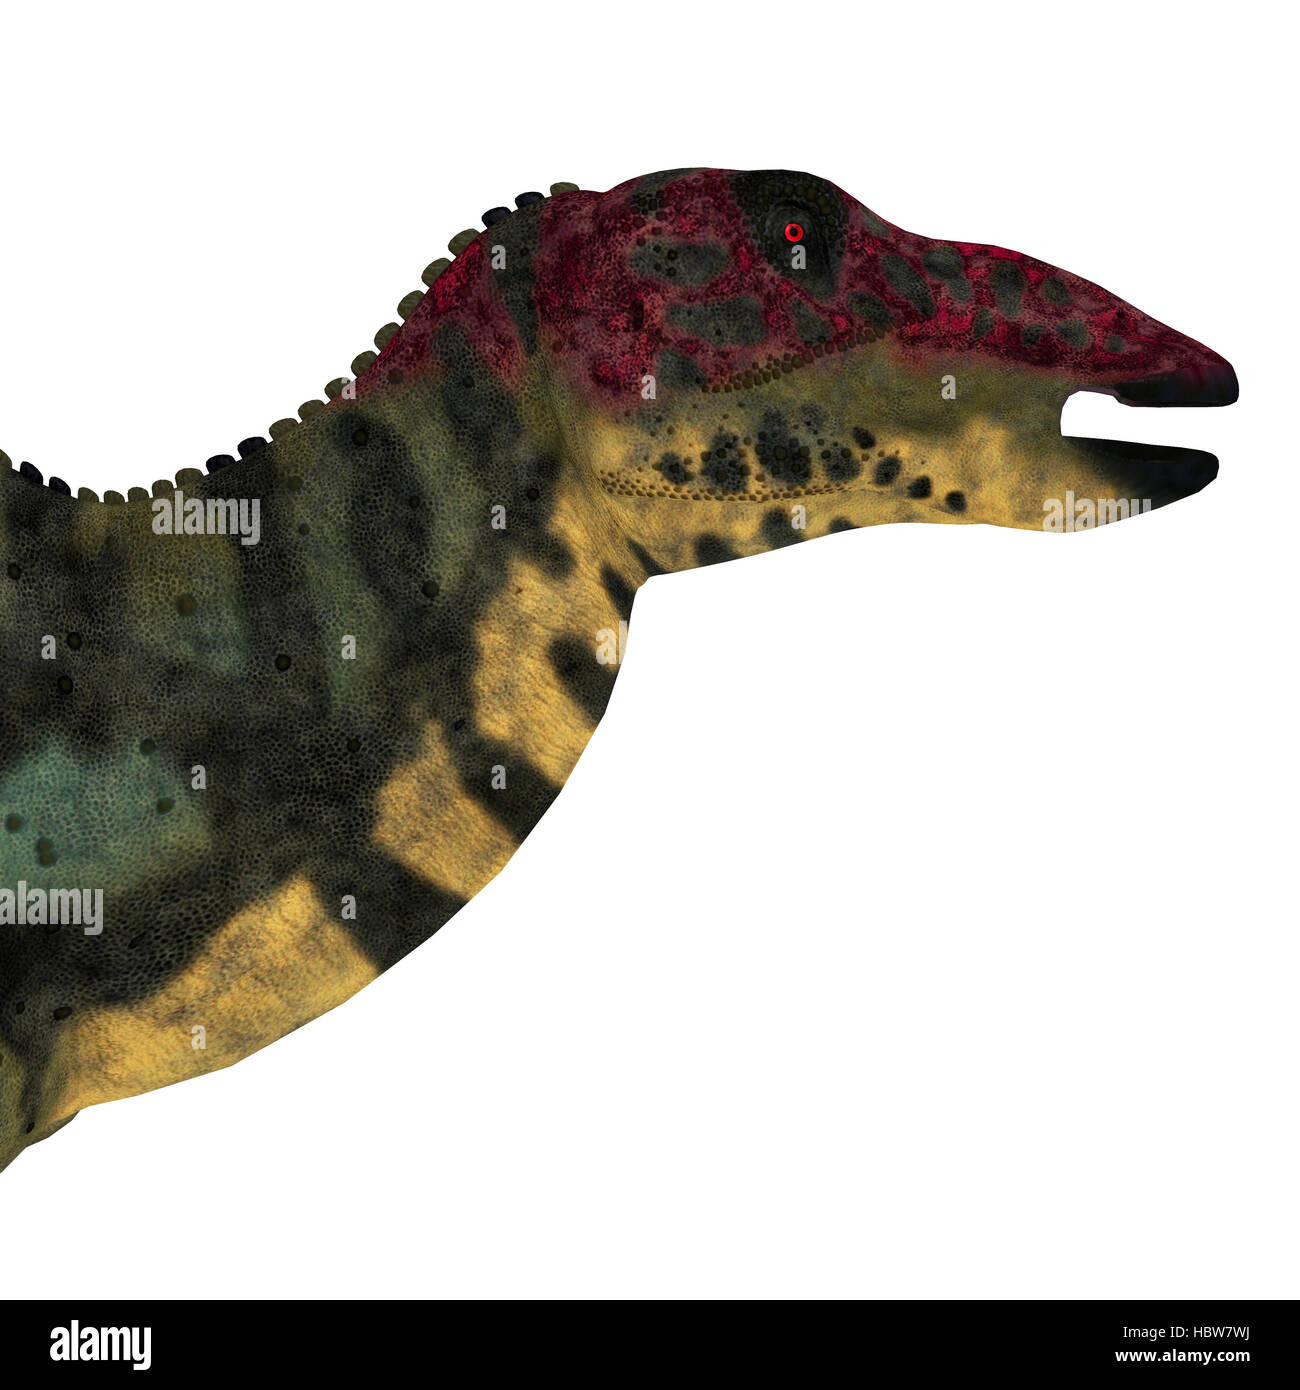 Shuangmiaosaurus era un erbivoro iguanodont dinosaur che ha vissuto in Cina nel Cretaceo. Foto Stock